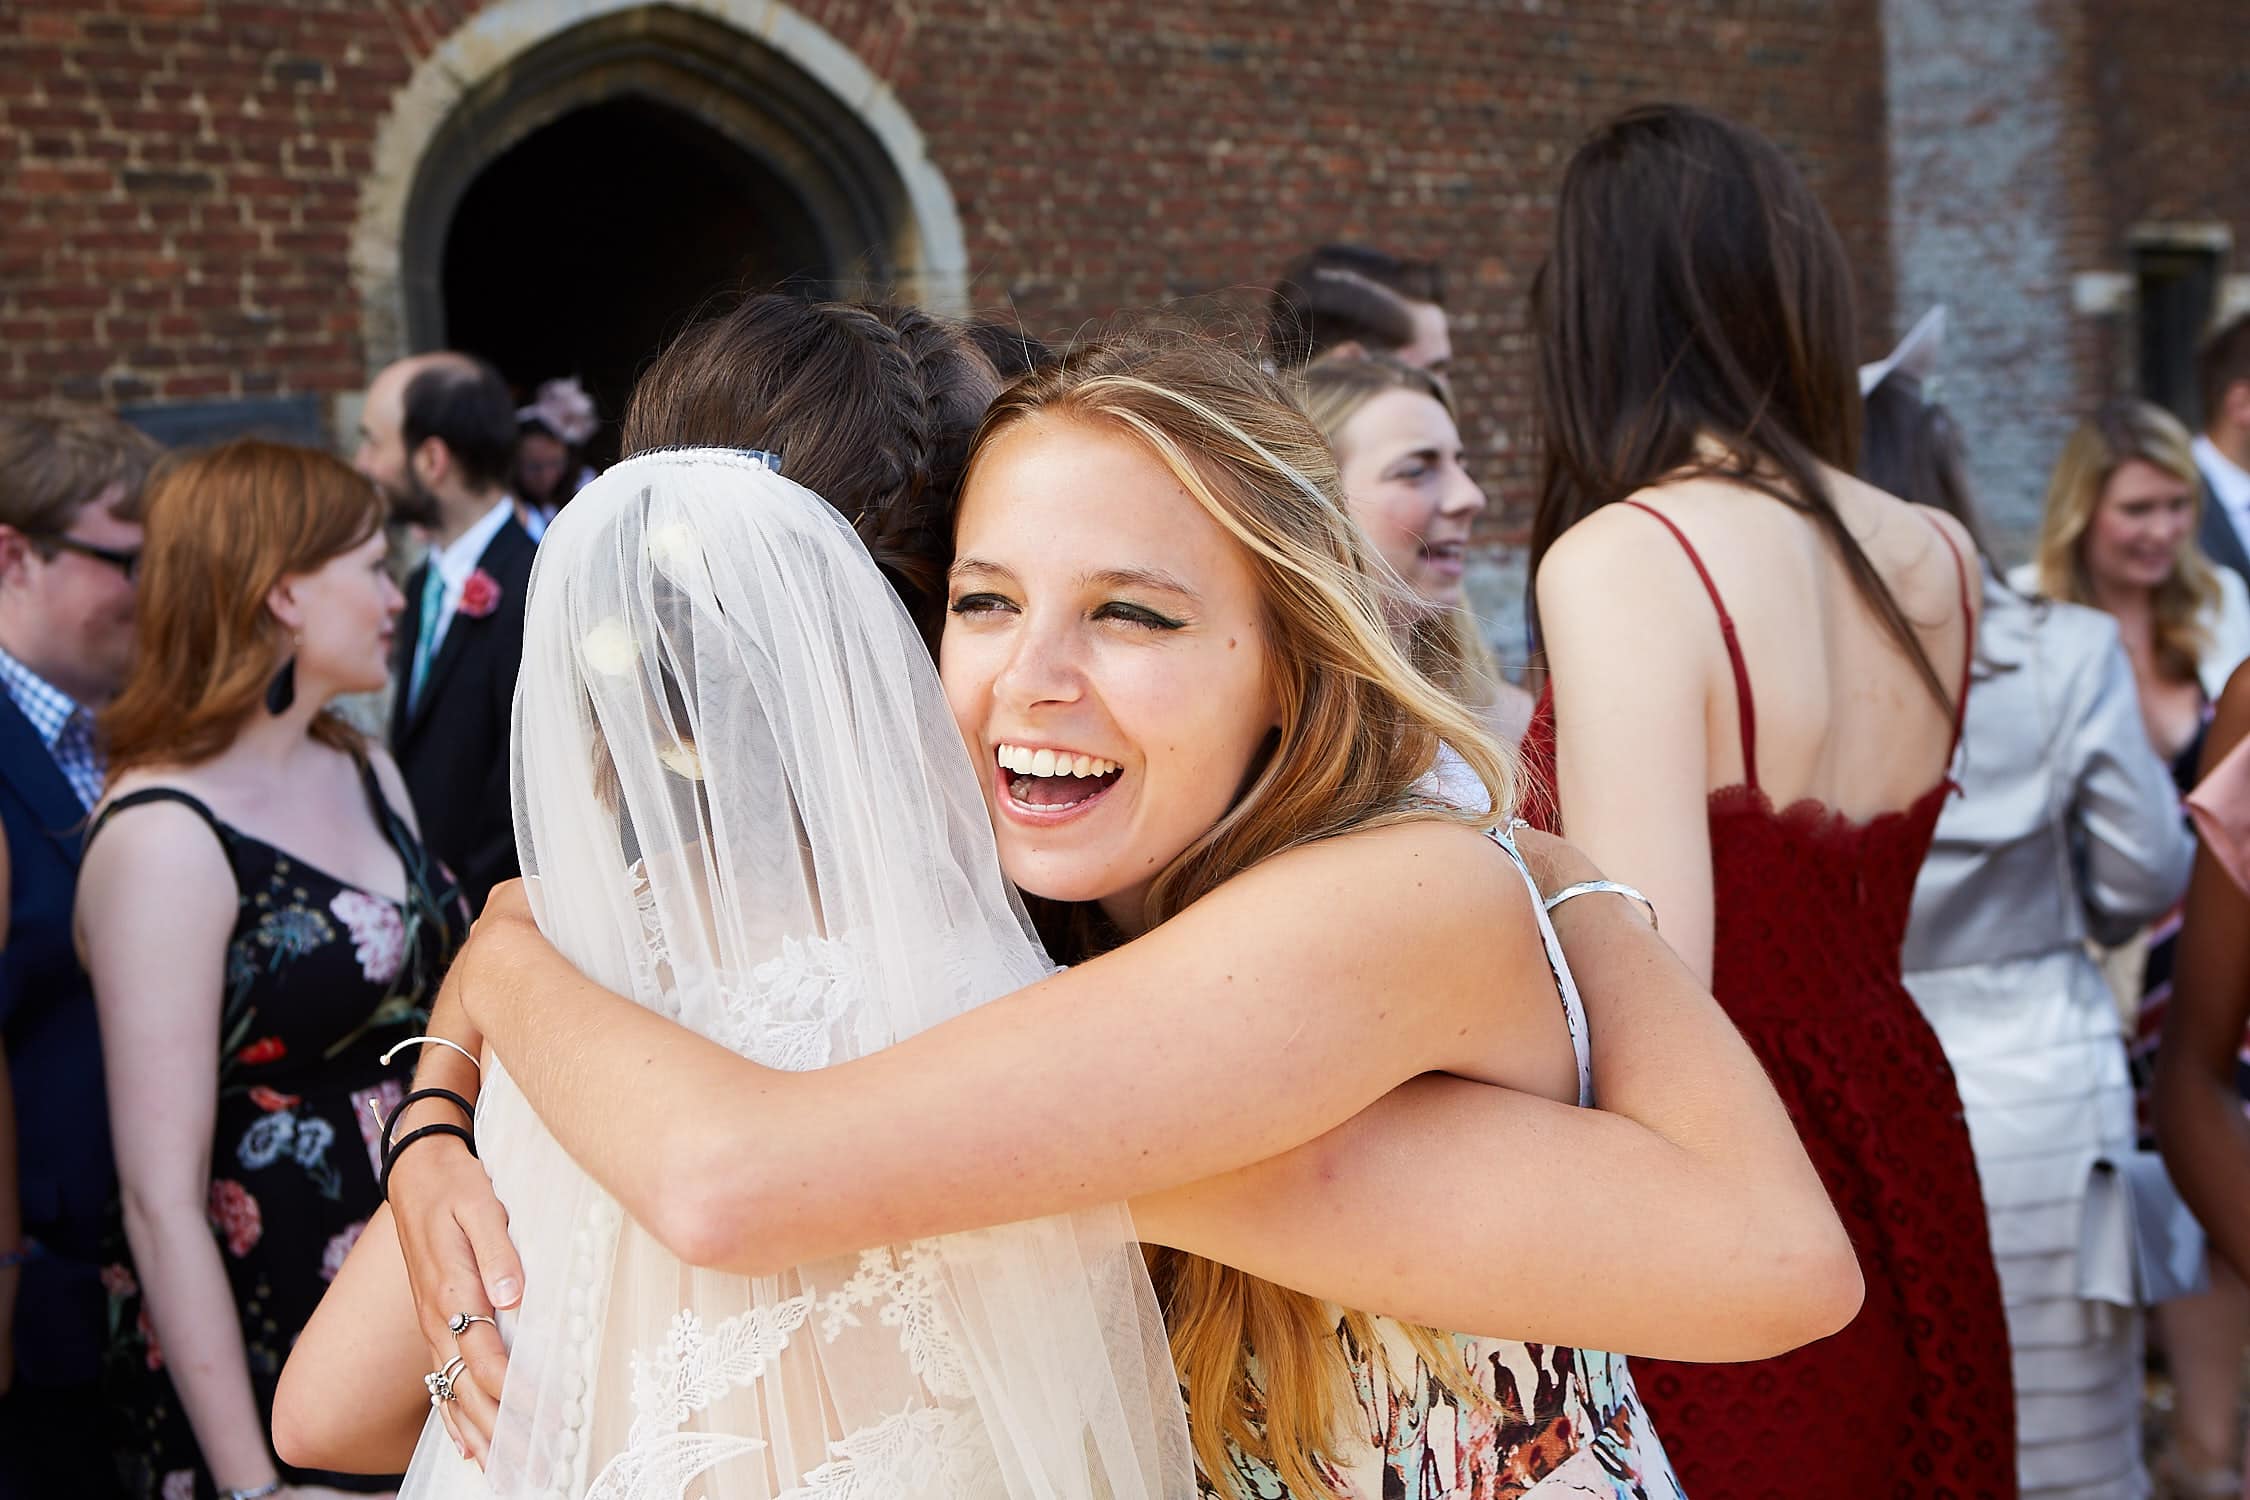 Hugging a bride a guest smiles